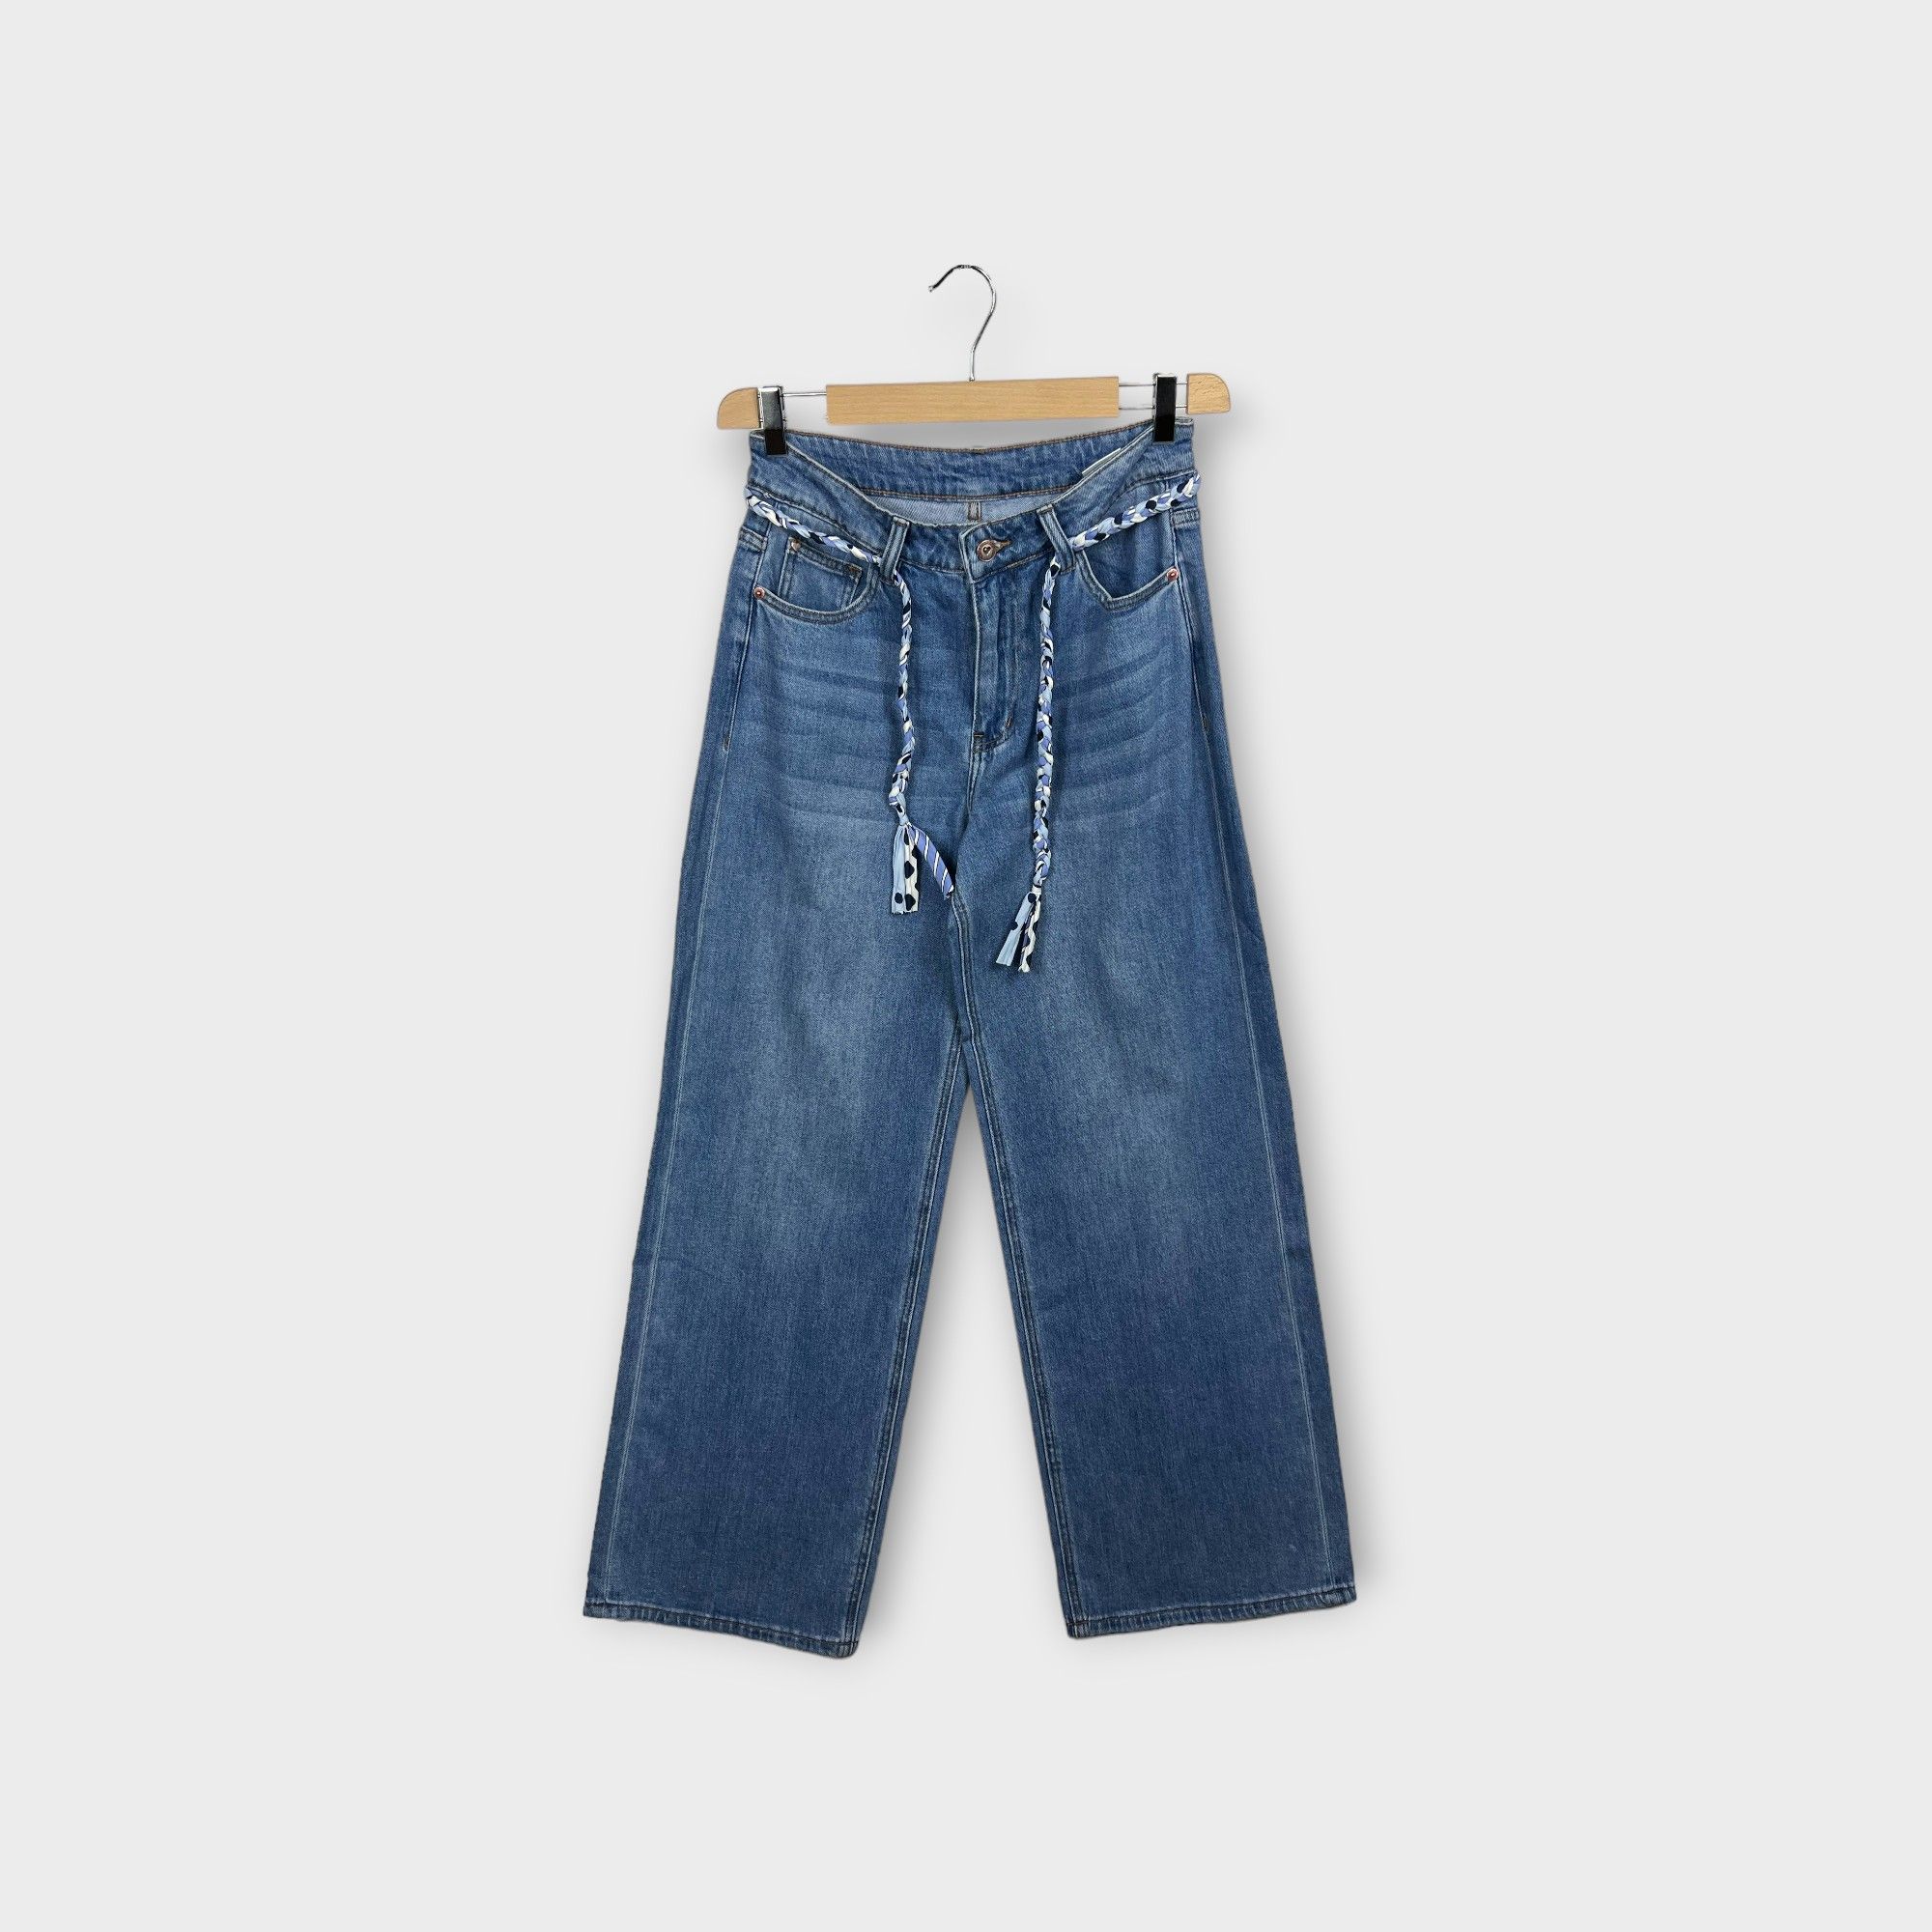 images/virtuemart/product/HELLEH Pantaloni donna modello palazzo a cinque tasche in tela di jeans colore light denim 1.jpg